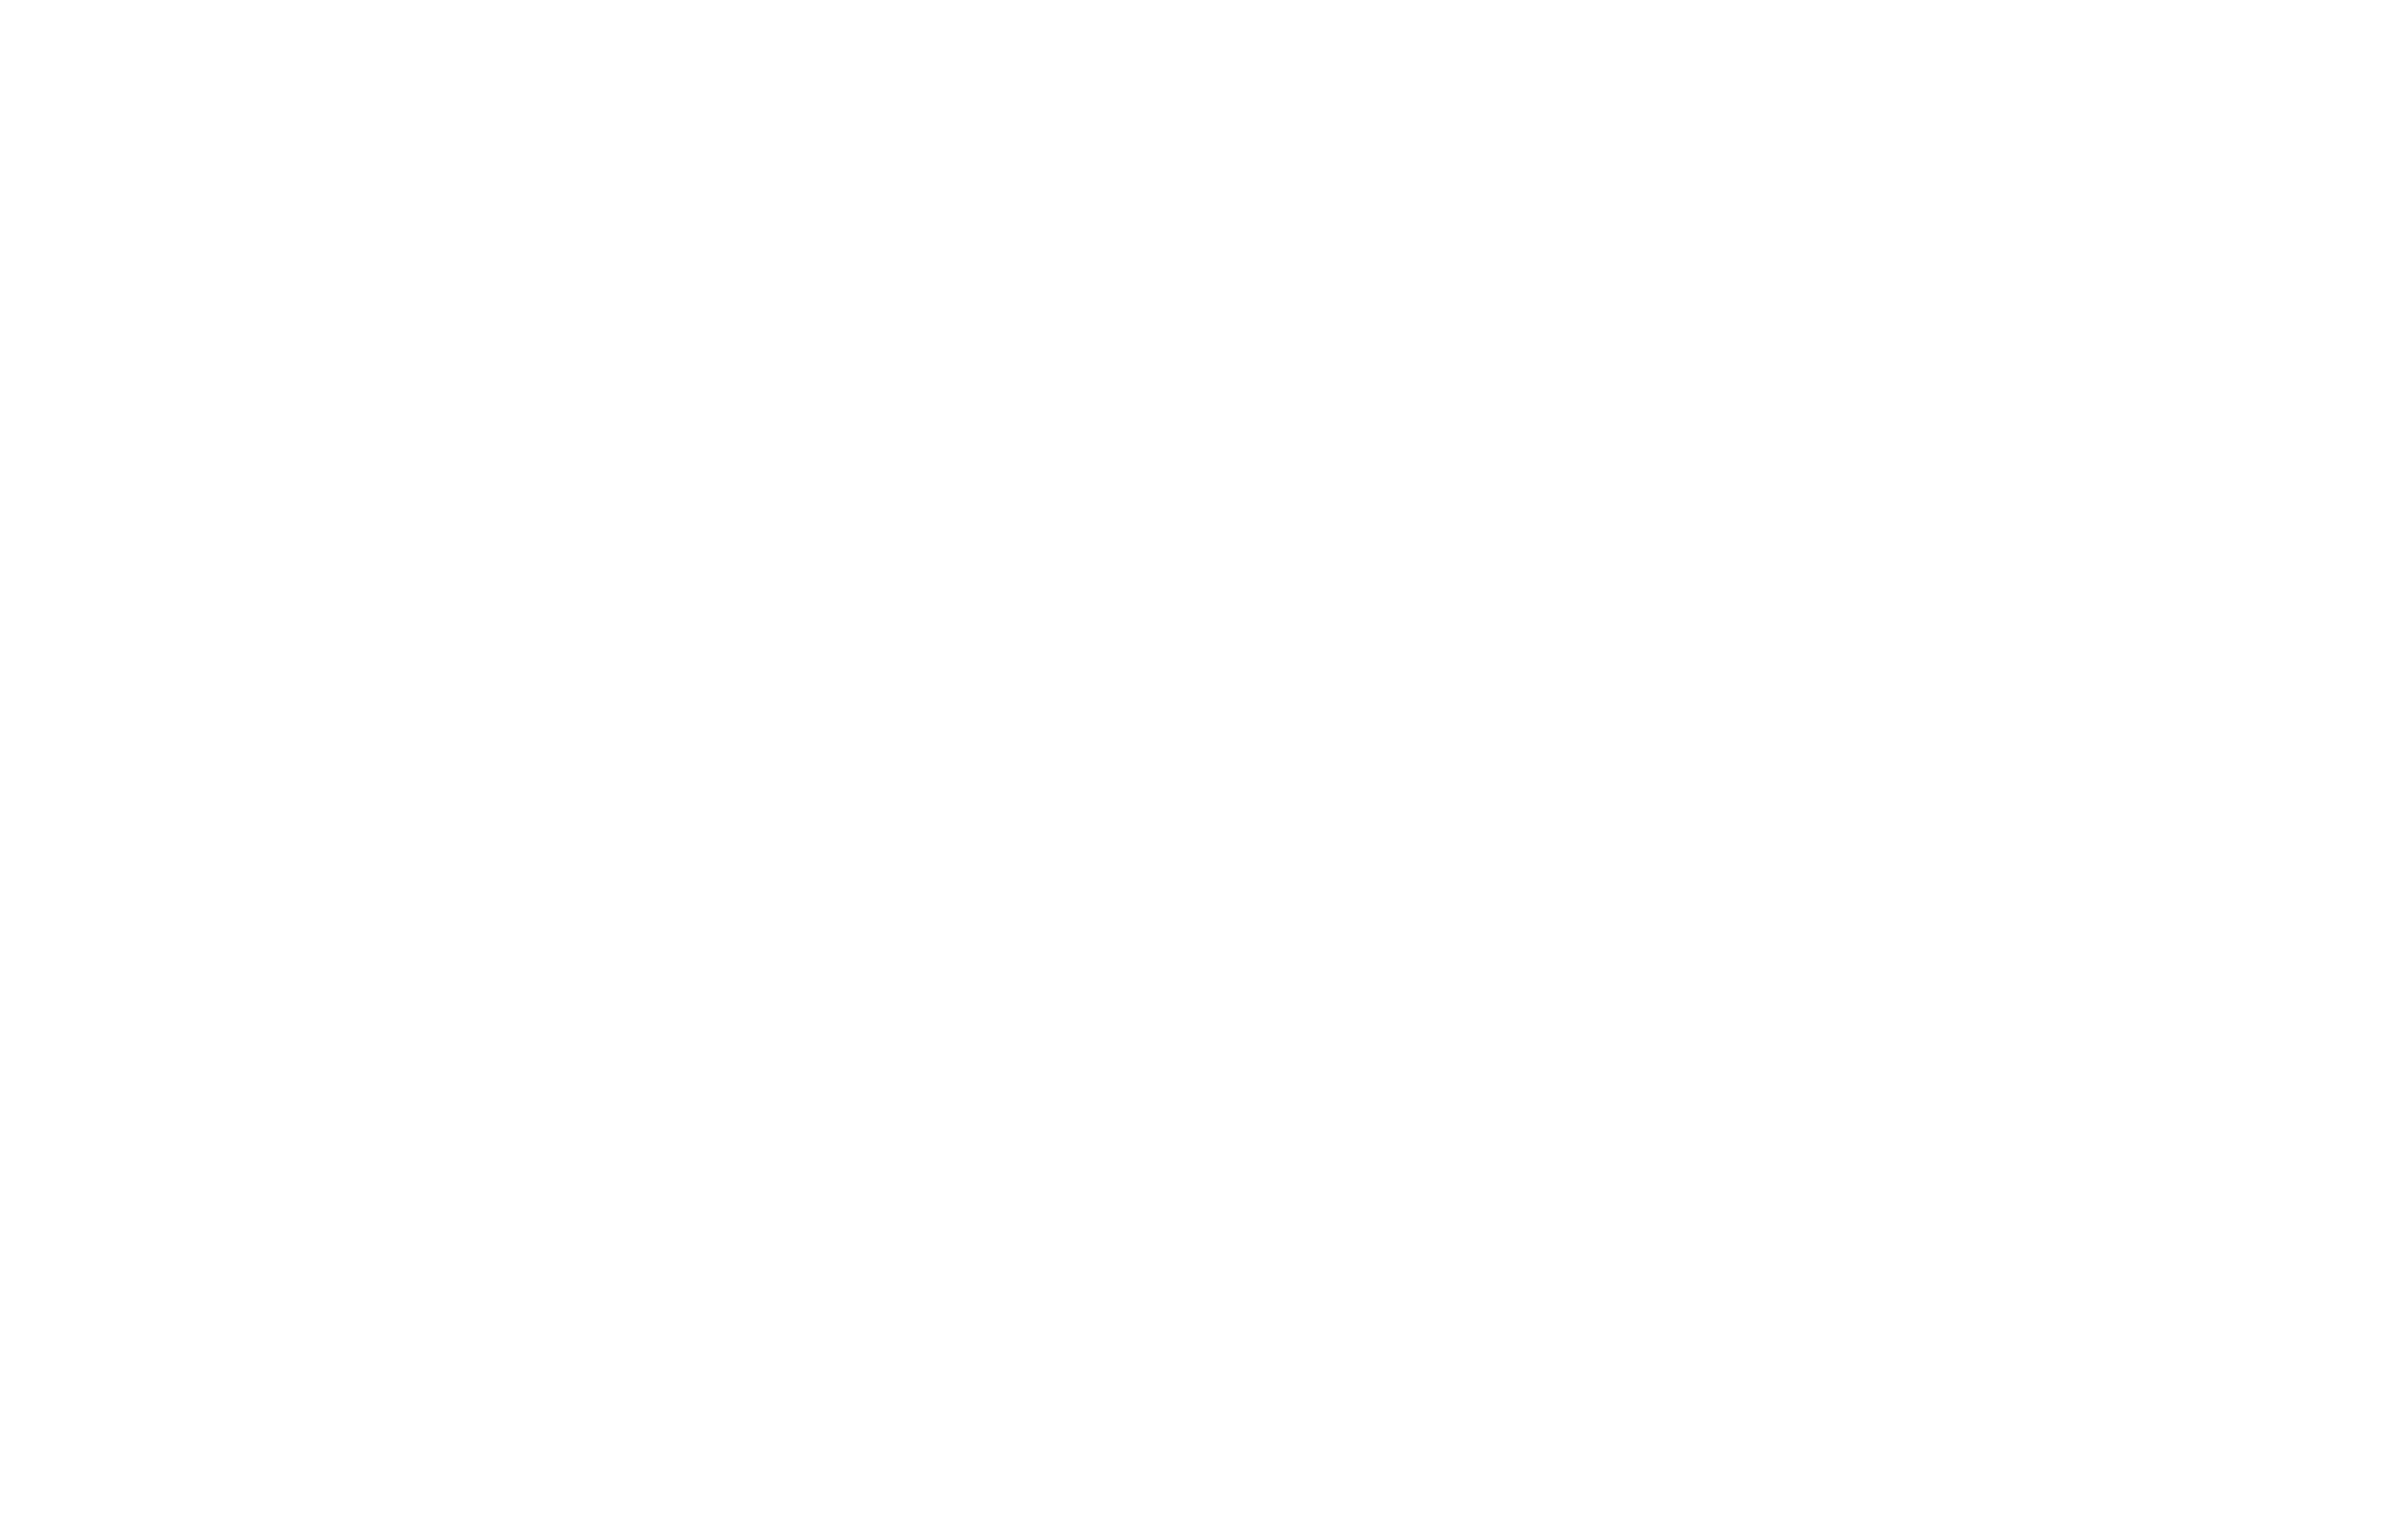 UHF Solutions